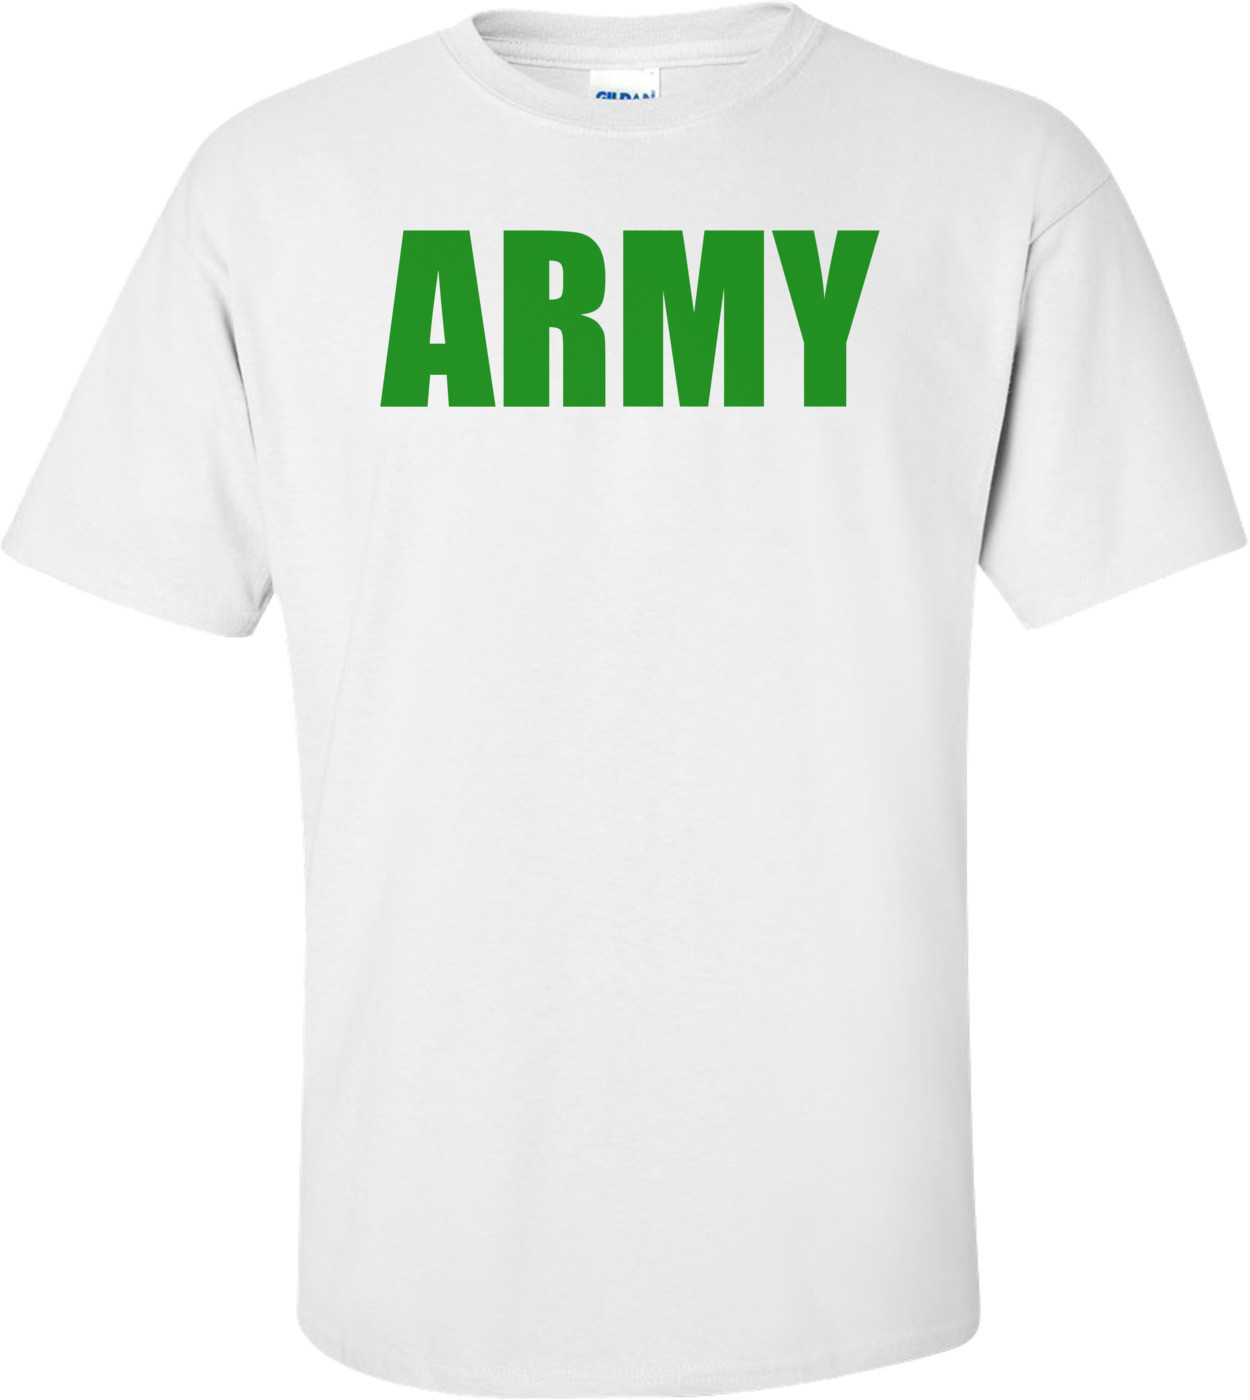 ARMY Shirt